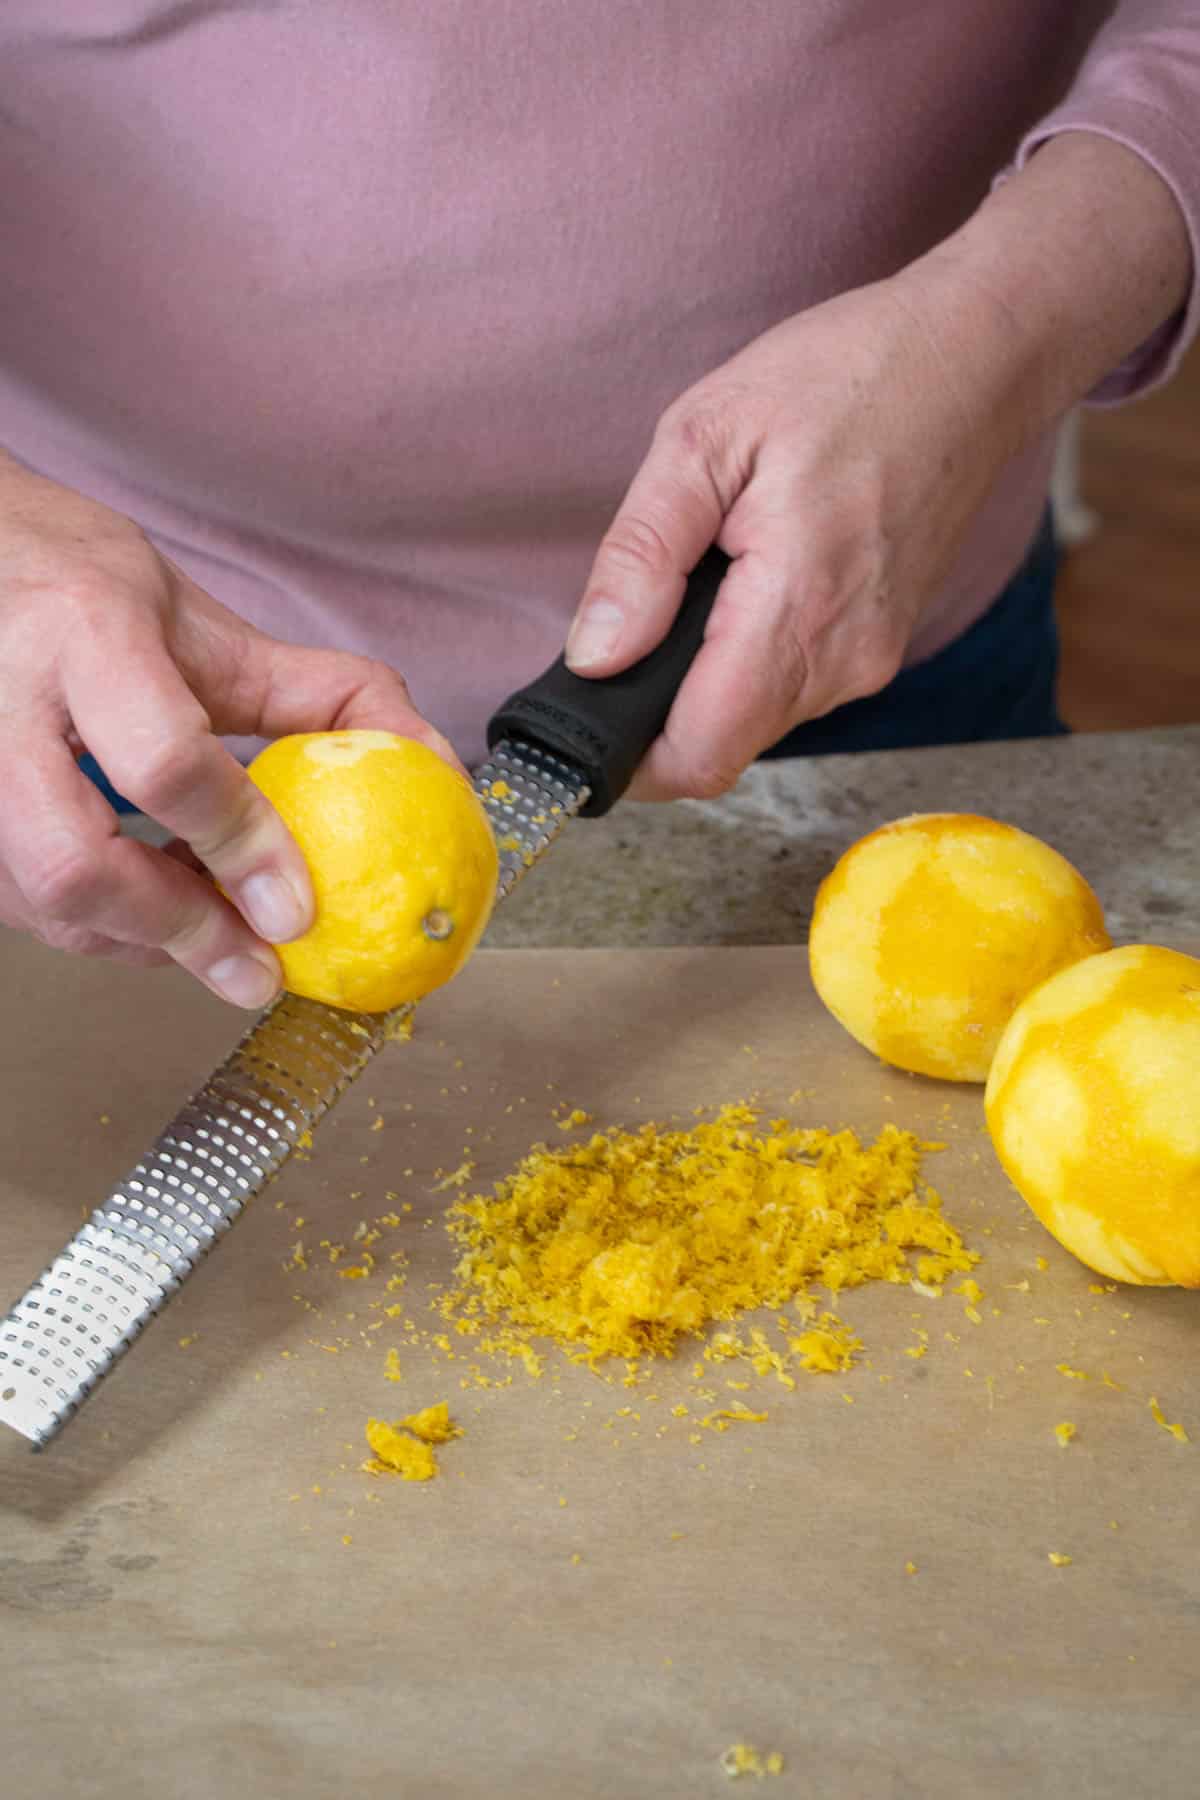 using 2 hands and a zester to zest a whole lemon onto parchment paper